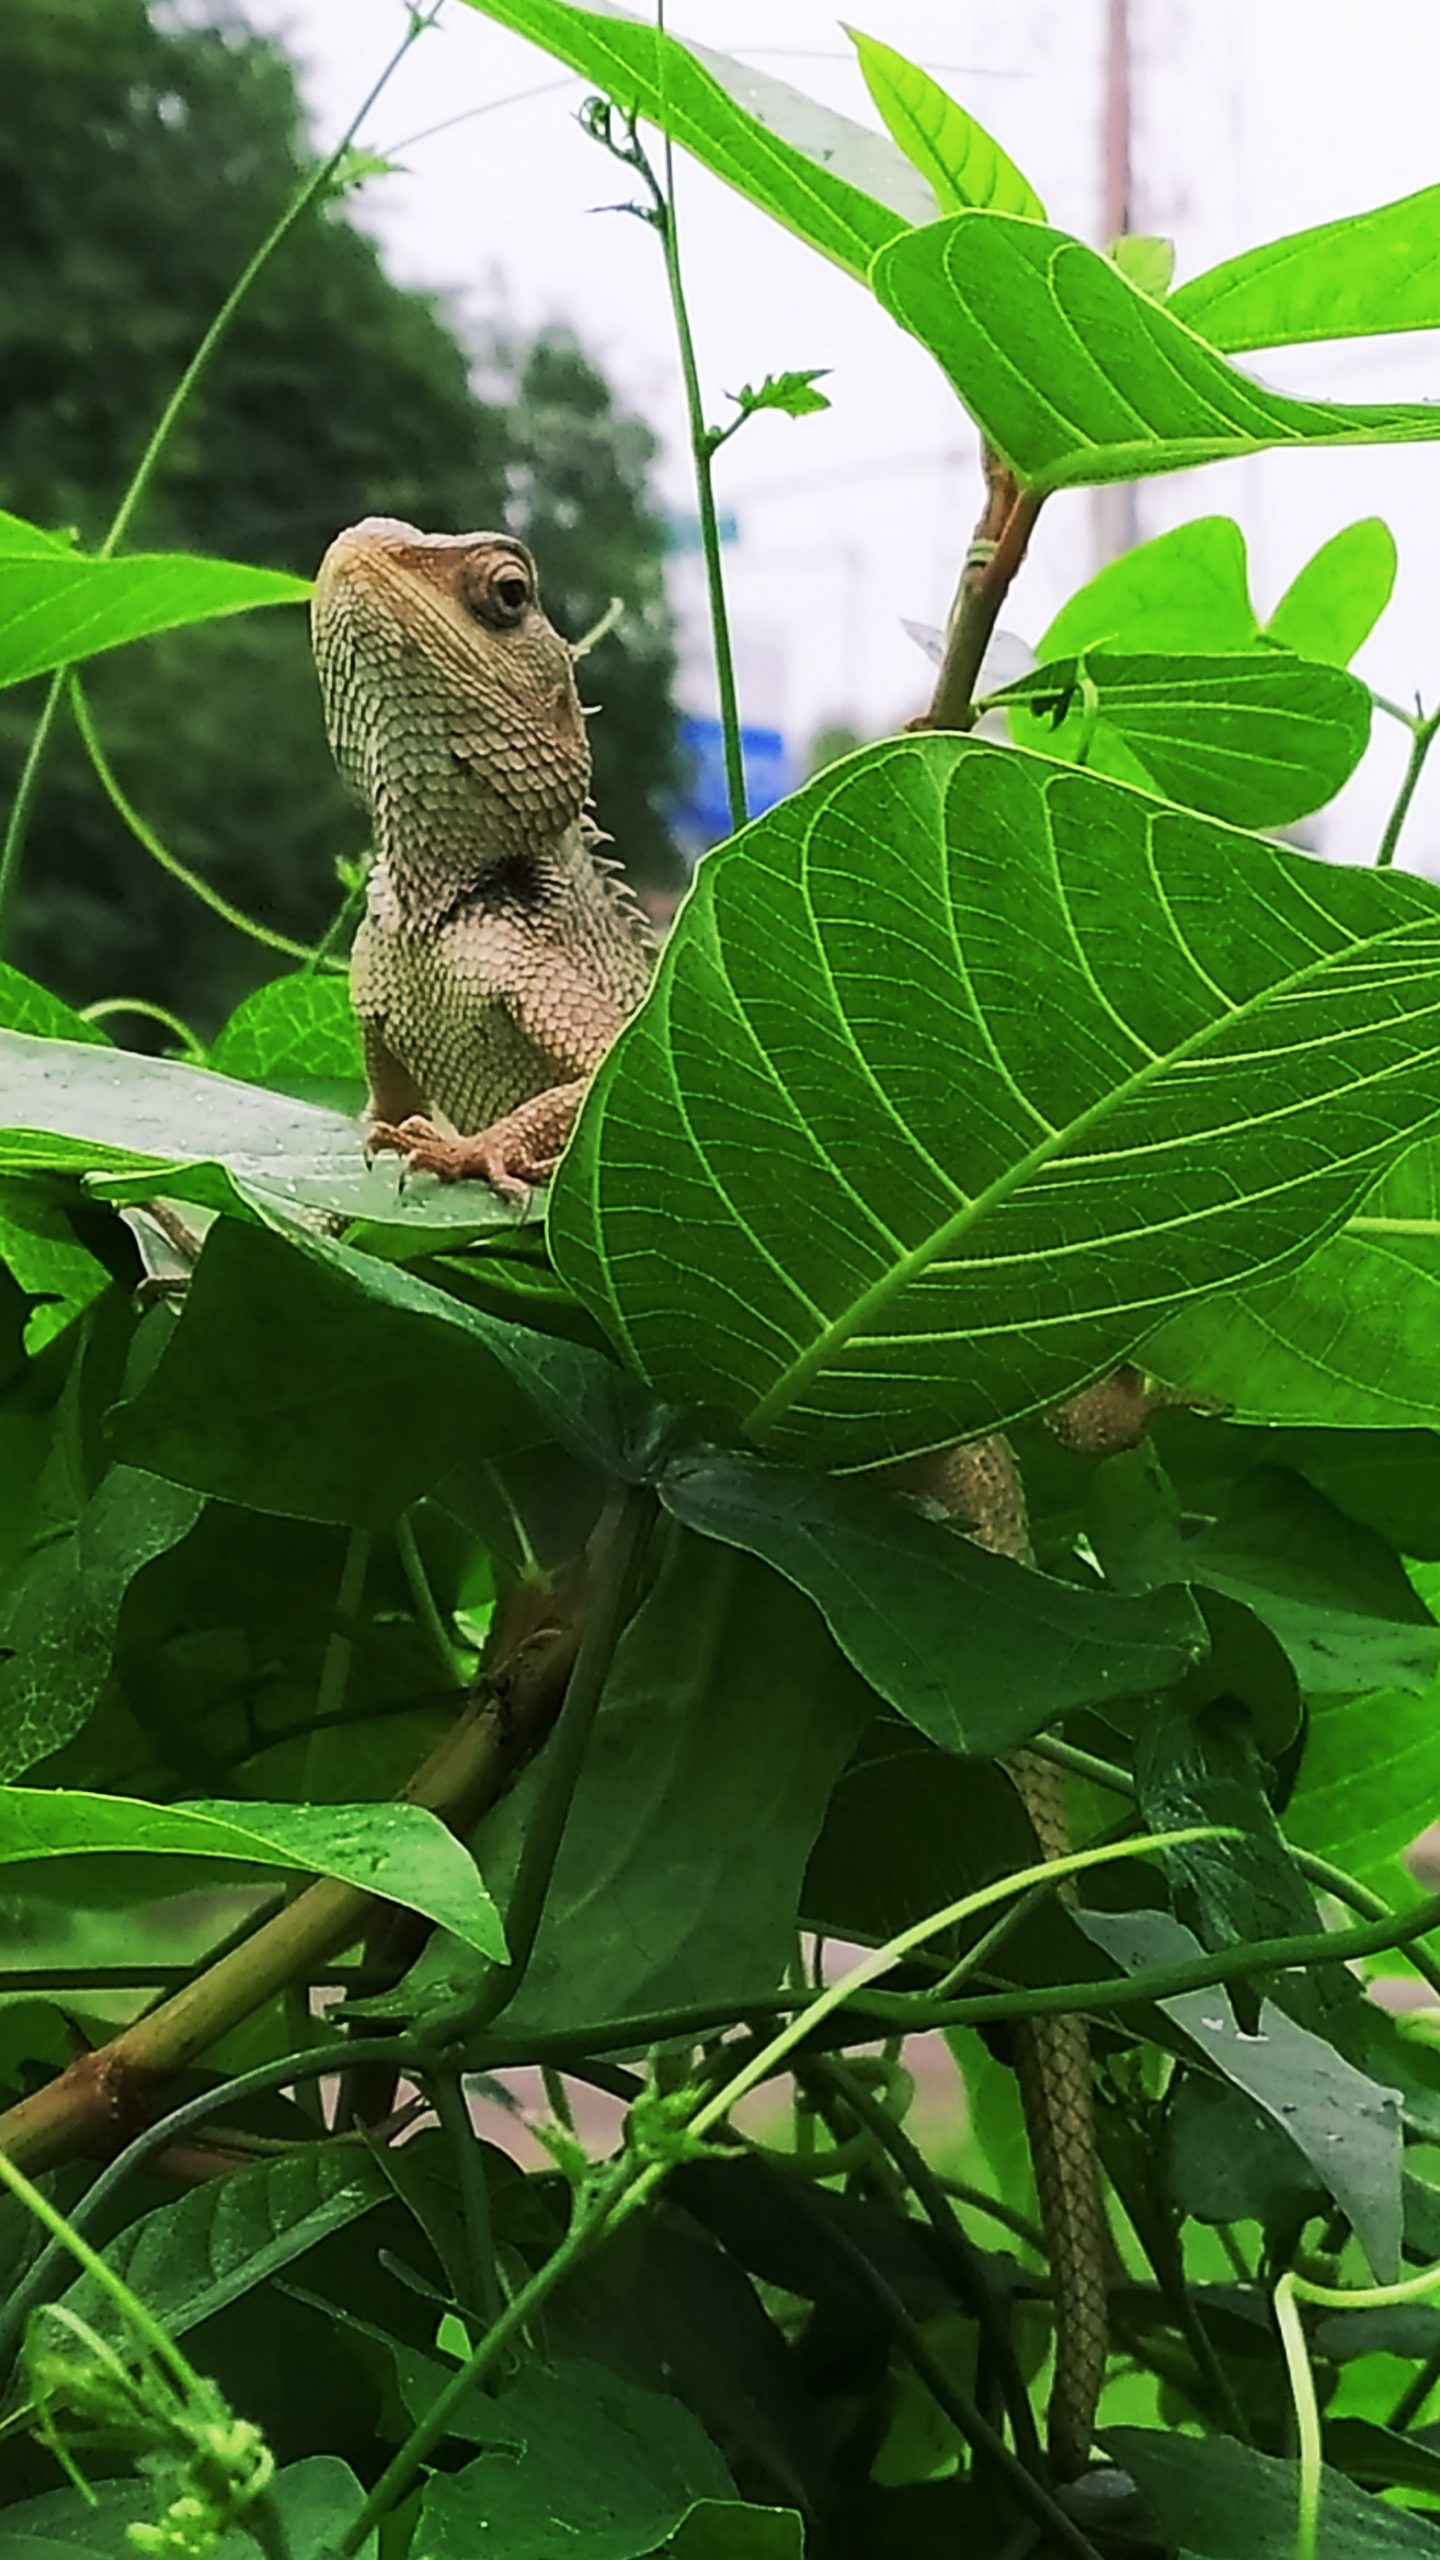 A chameleon on a plant